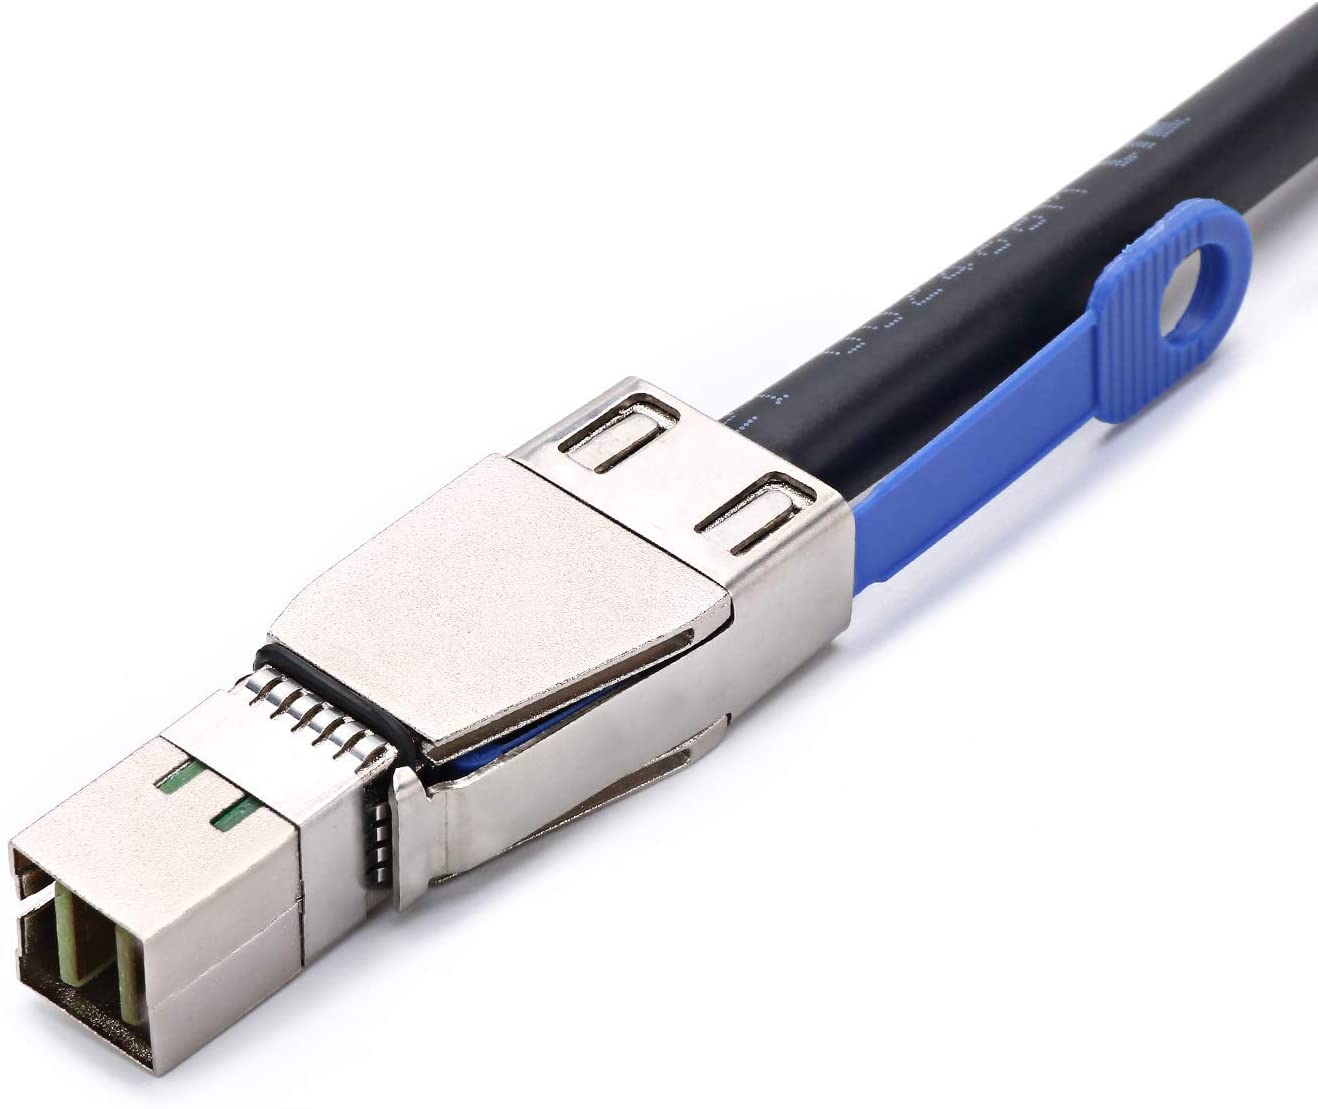 1M Data Storage Cables p/n C5556X4-1M: HD Mini SAS Electronics Mini SAS x 4 